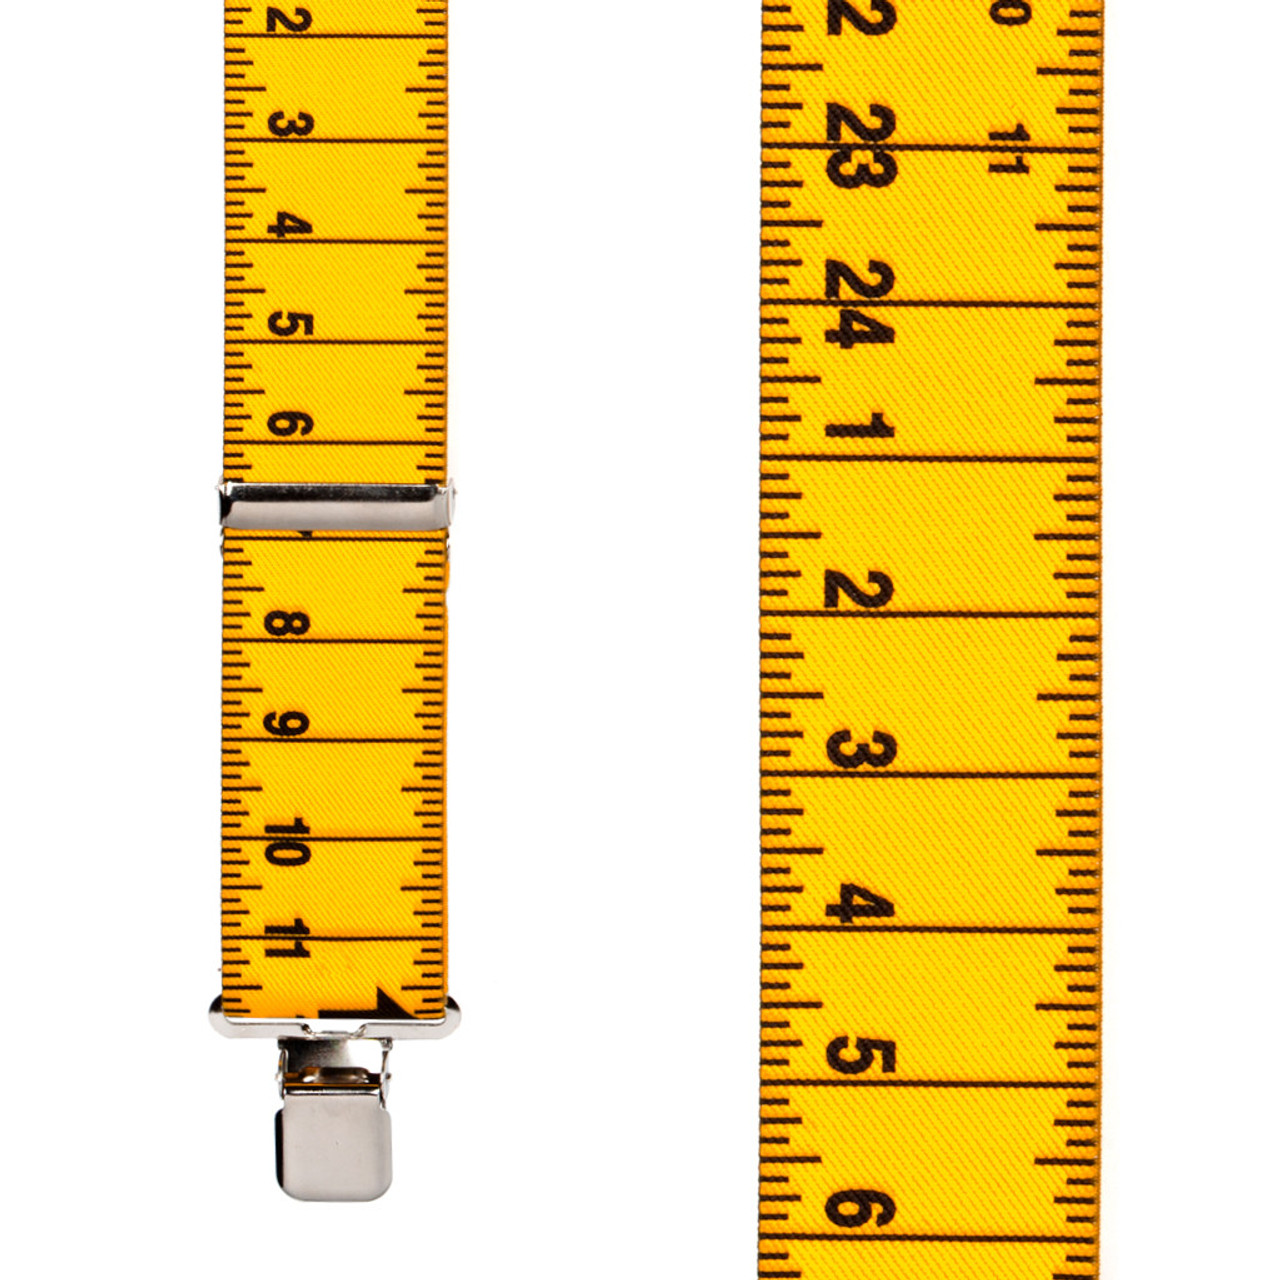 8 Inches of Pleasure Funny Big Size Ruler Tape Measure Measurement | Sticker